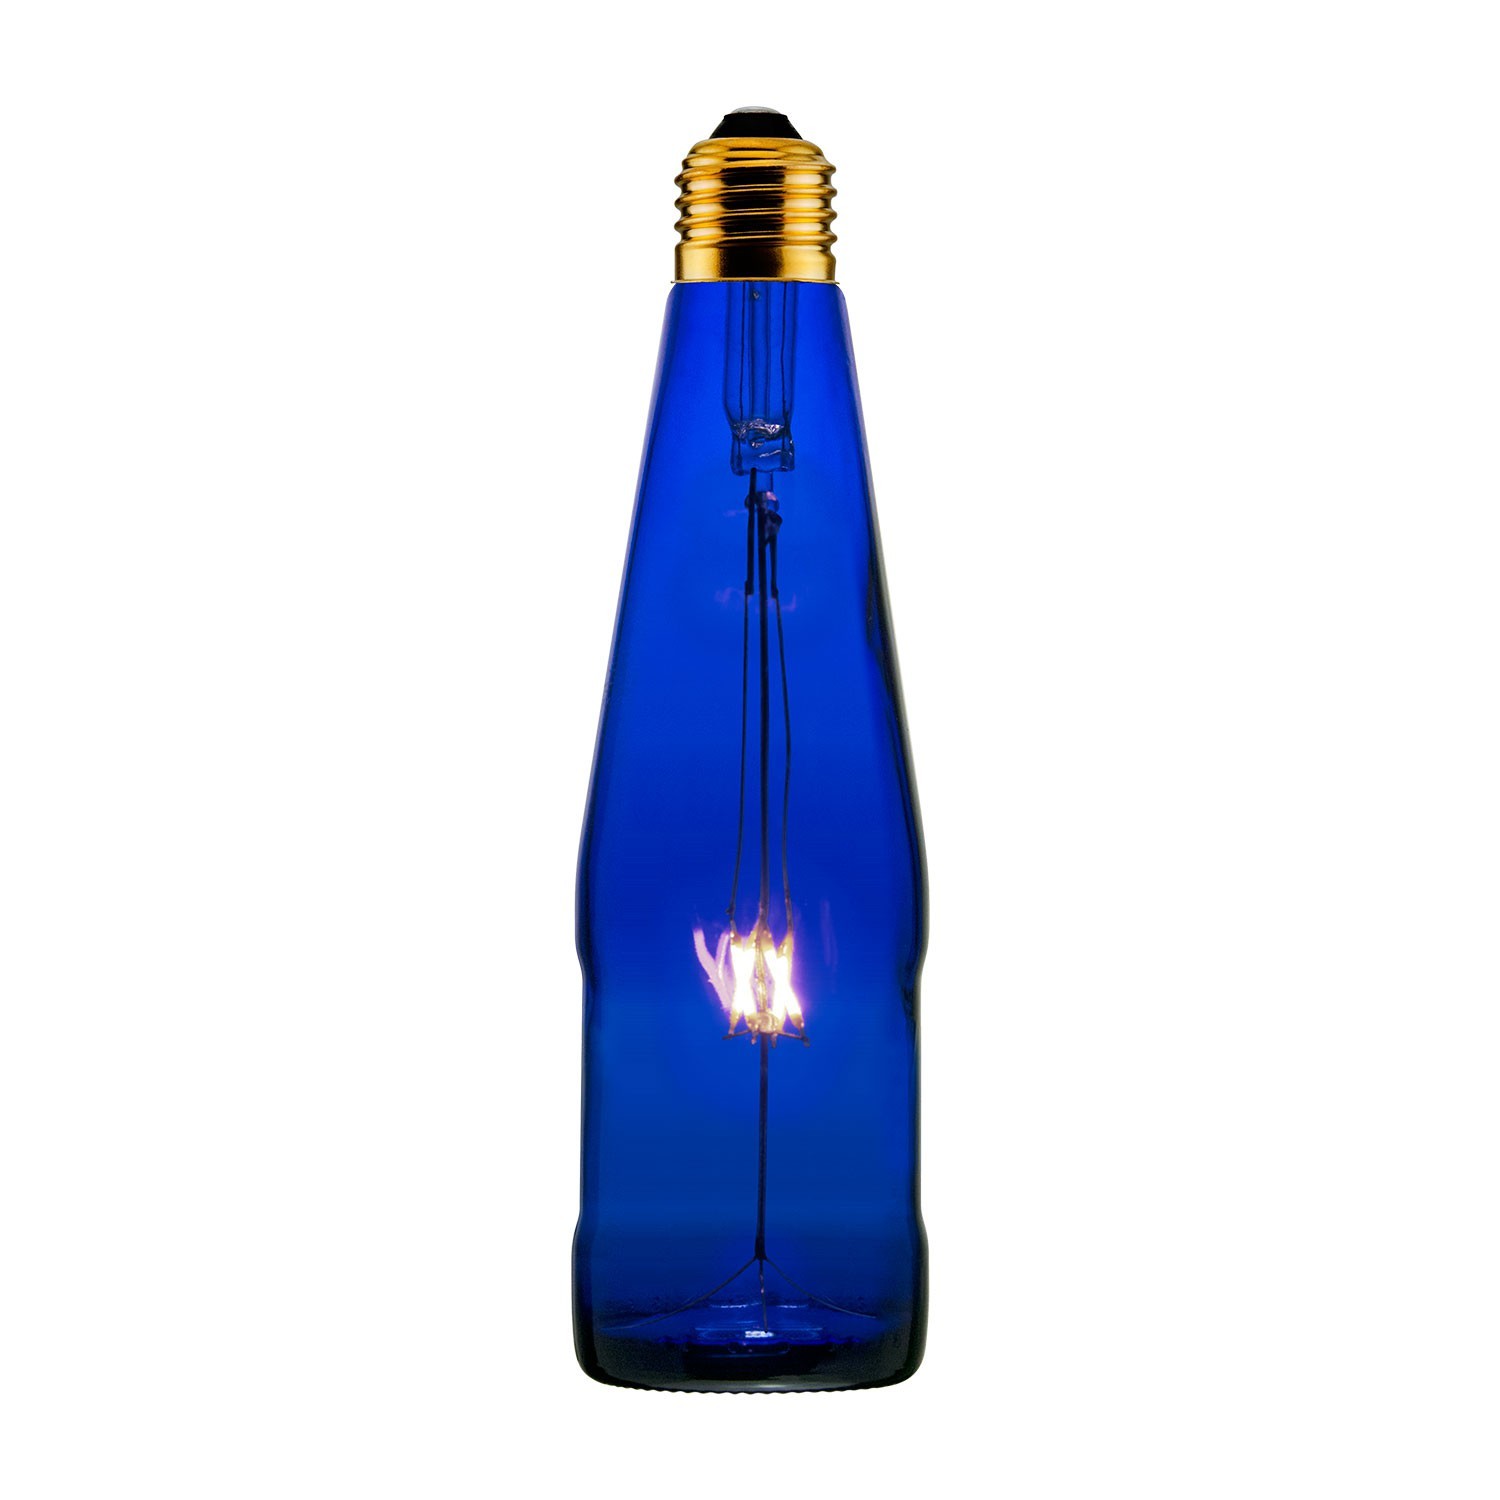 LED Modra žarnica Steklenica 3.5W E27 zatemnilna 3600K